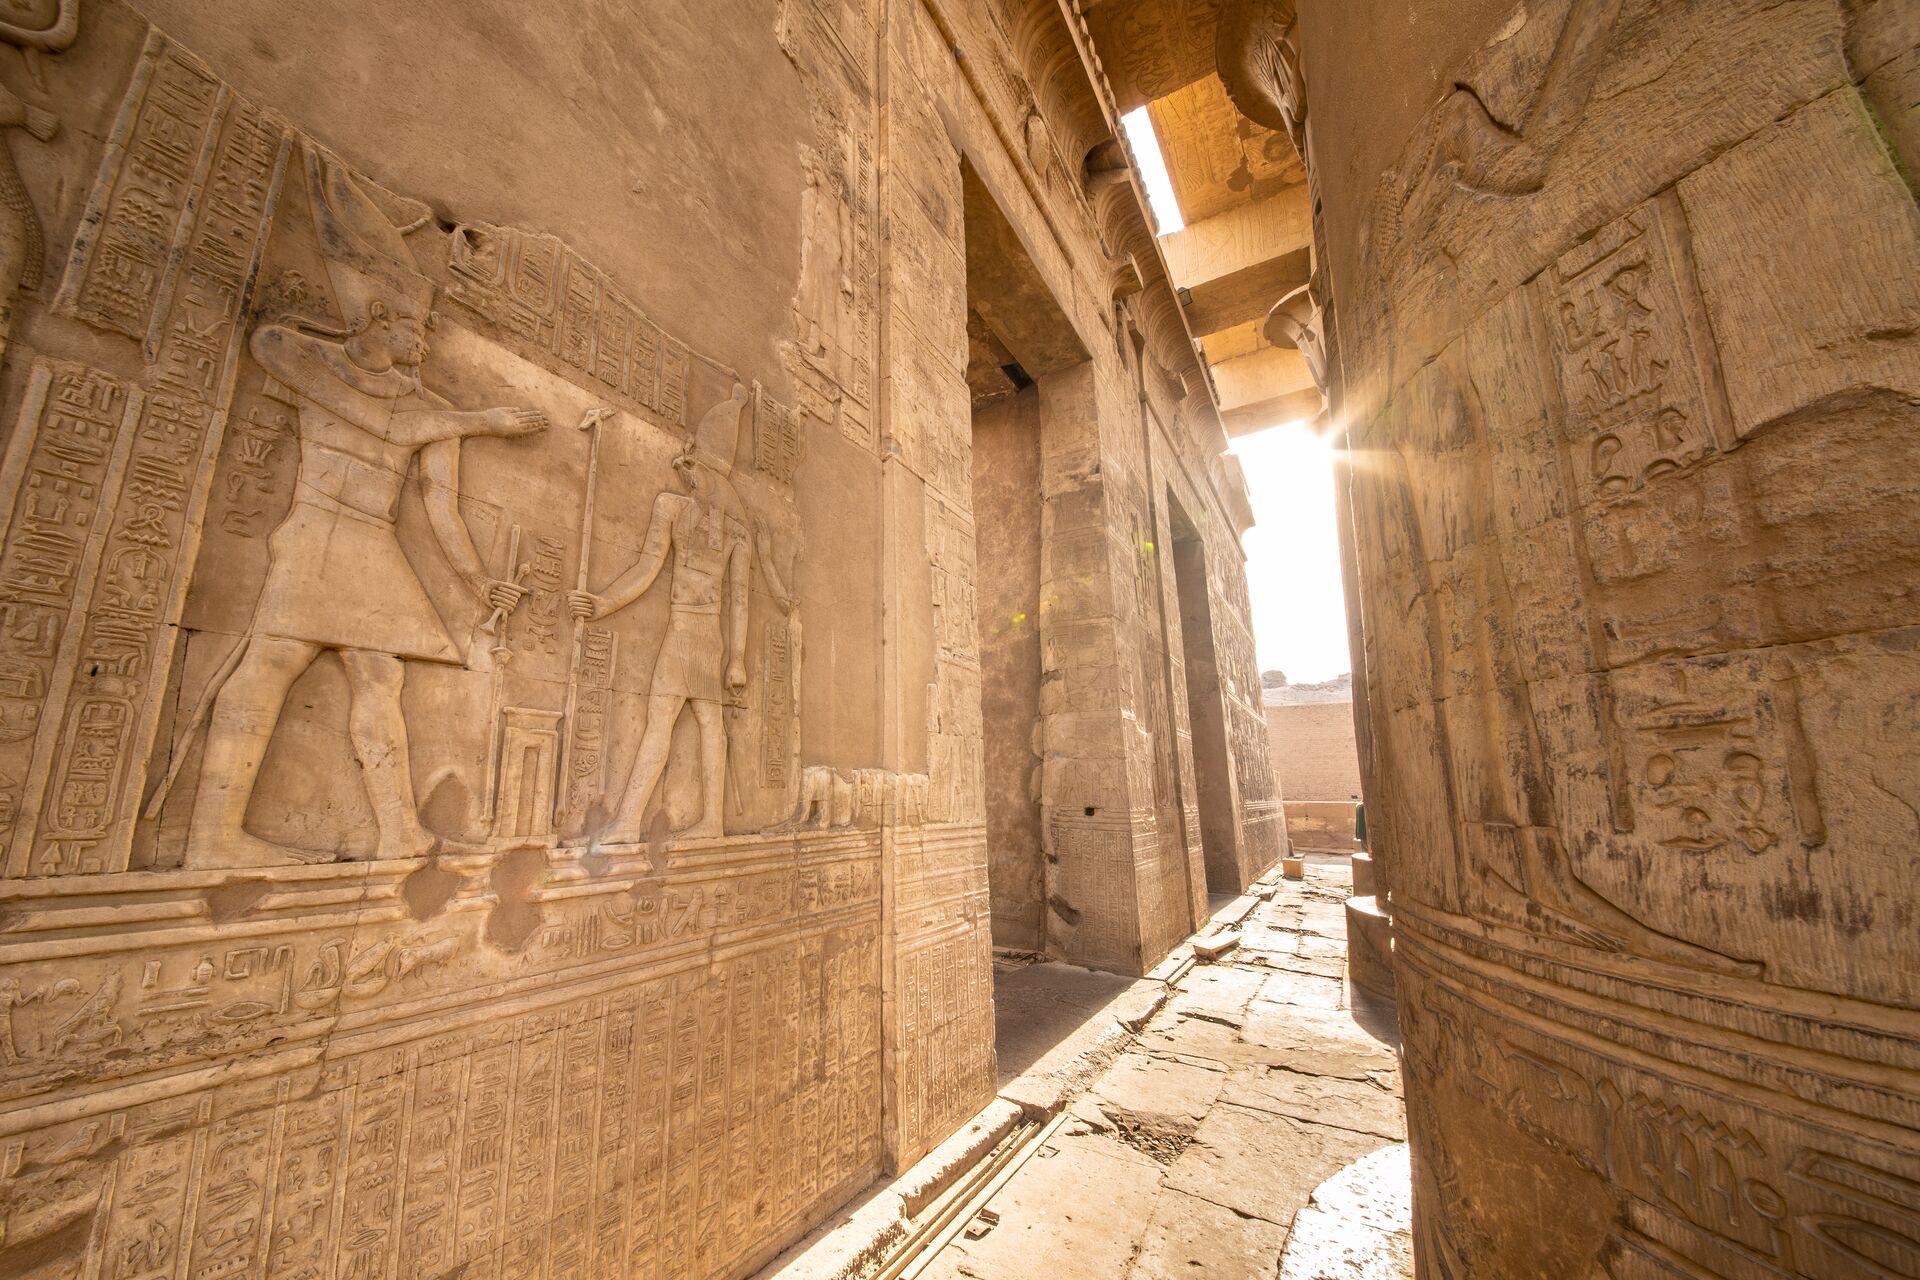 trafalgar tours egypt reviews